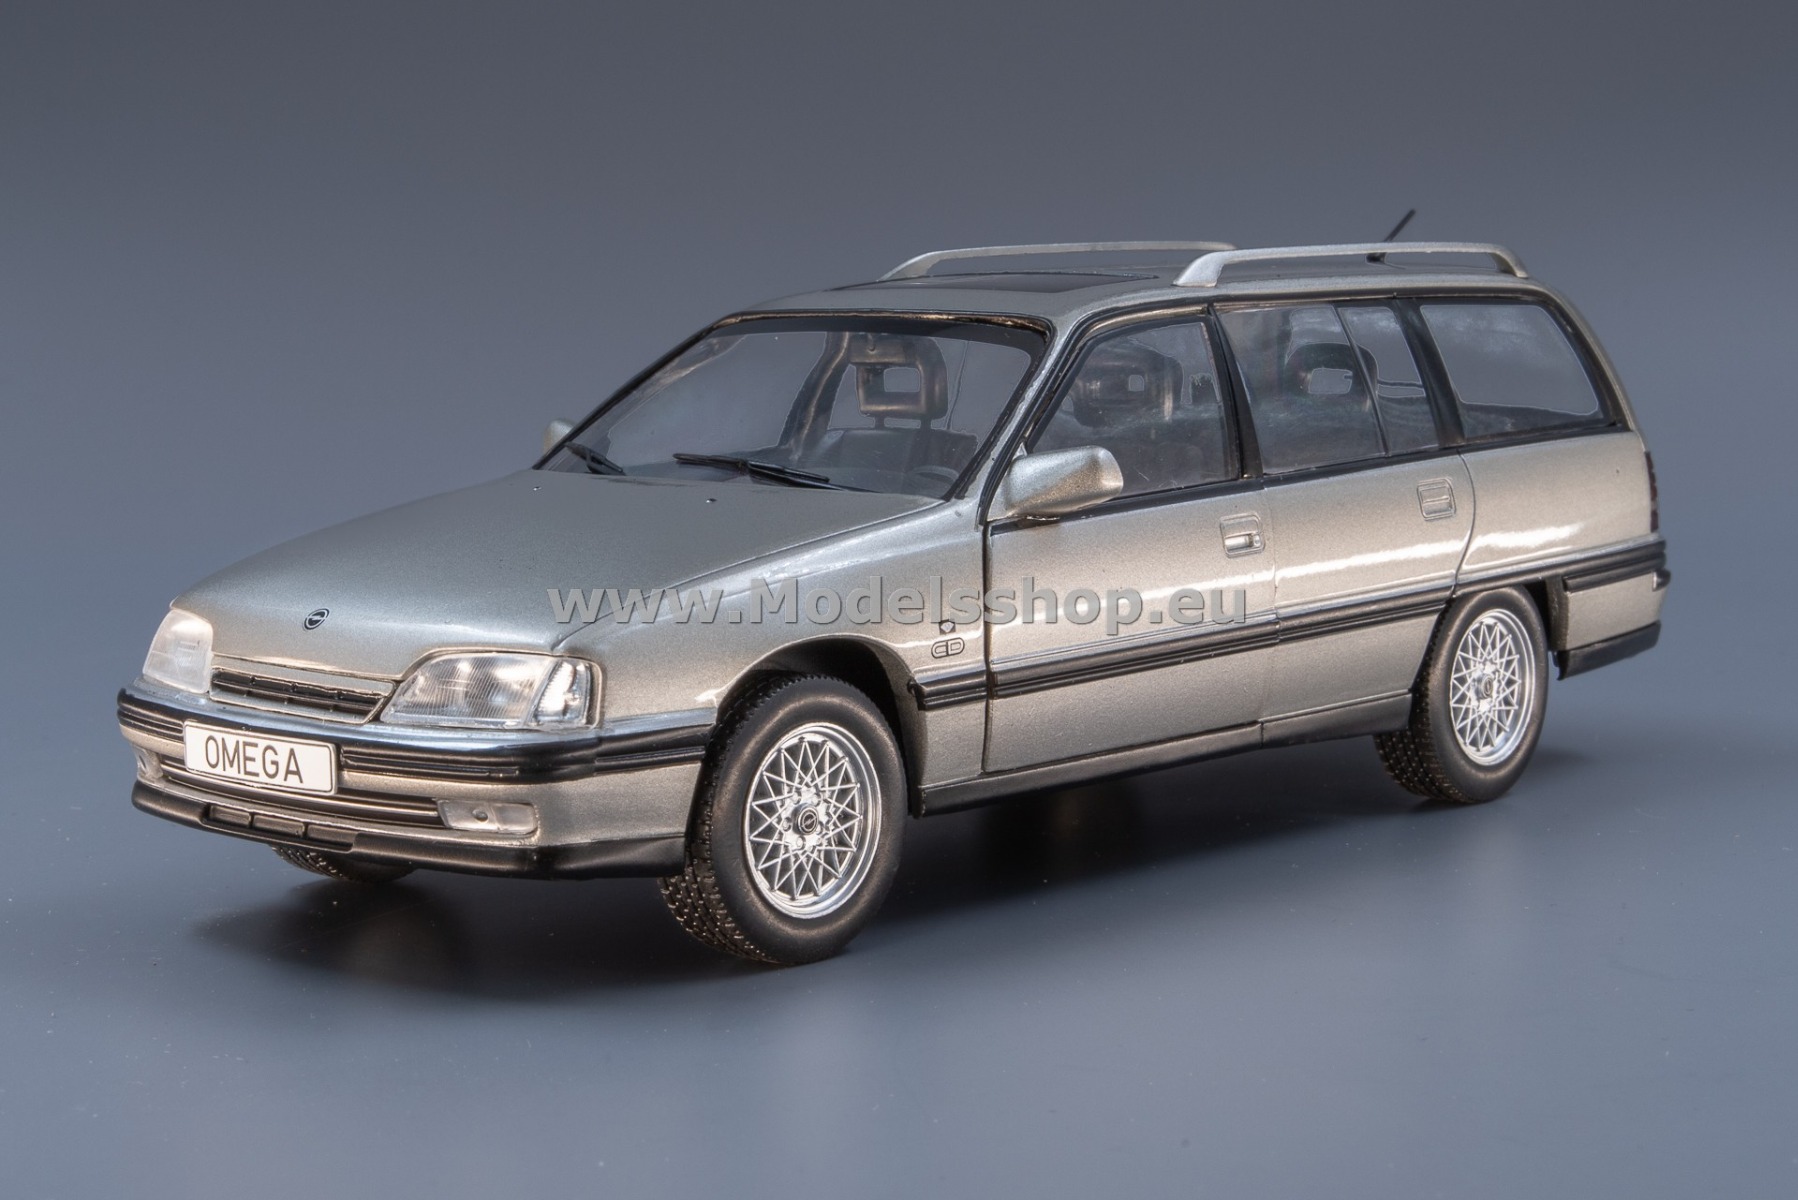 WhiteBox WB124165-O Opel Omega A2 Caravan, 1990 /grey - metallic/